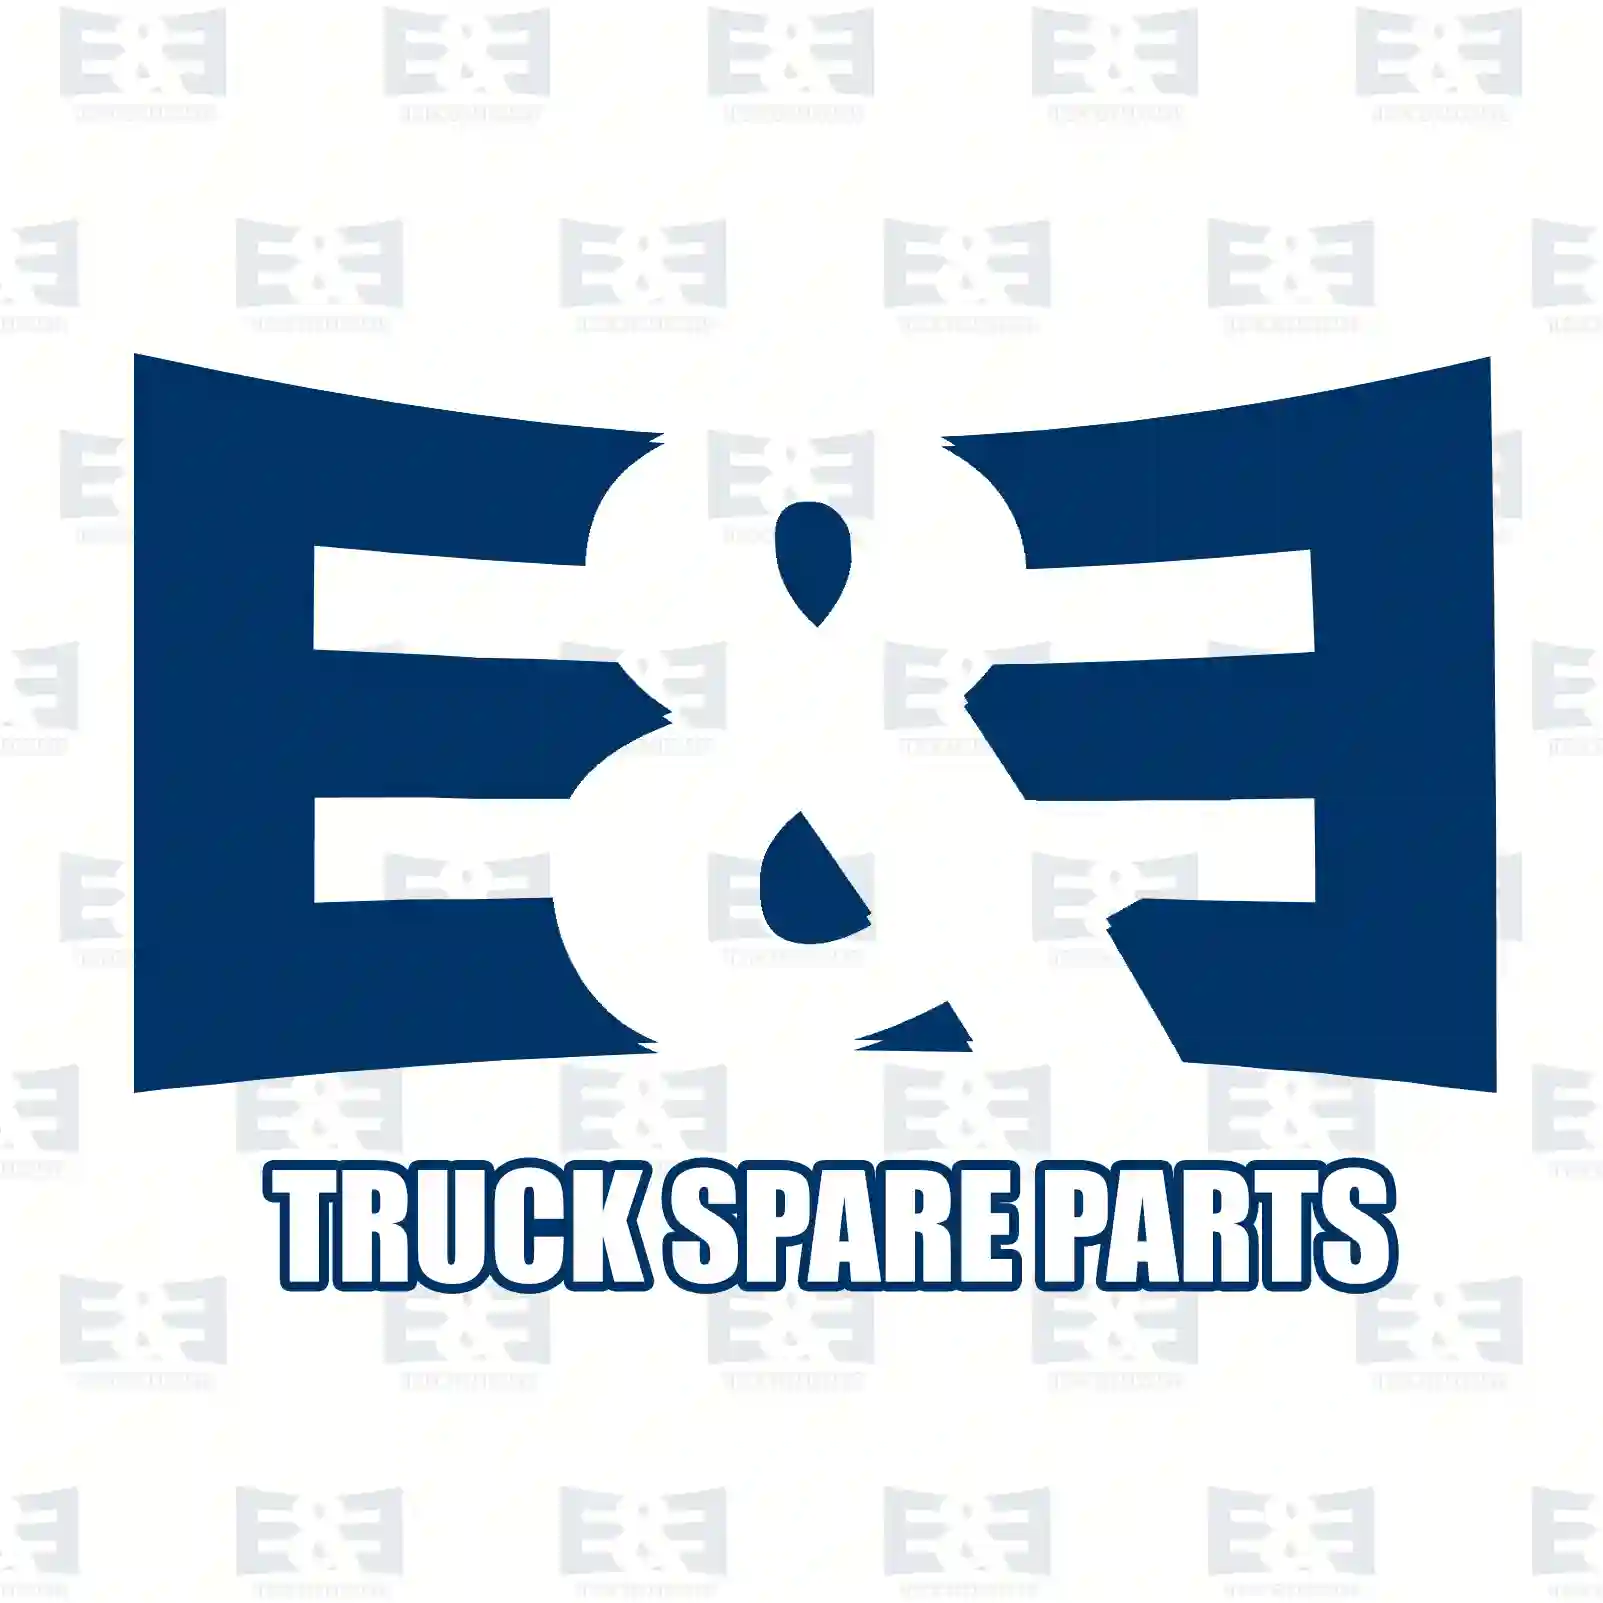 Brake carrier, 2E2296567, 81508026023, MCK1138 ||  2E2296567 E&E Truck Spare Parts | Truck Spare Parts, Auotomotive Spare Parts Brake carrier, 2E2296567, 81508026023, MCK1138 ||  2E2296567 E&E Truck Spare Parts | Truck Spare Parts, Auotomotive Spare Parts